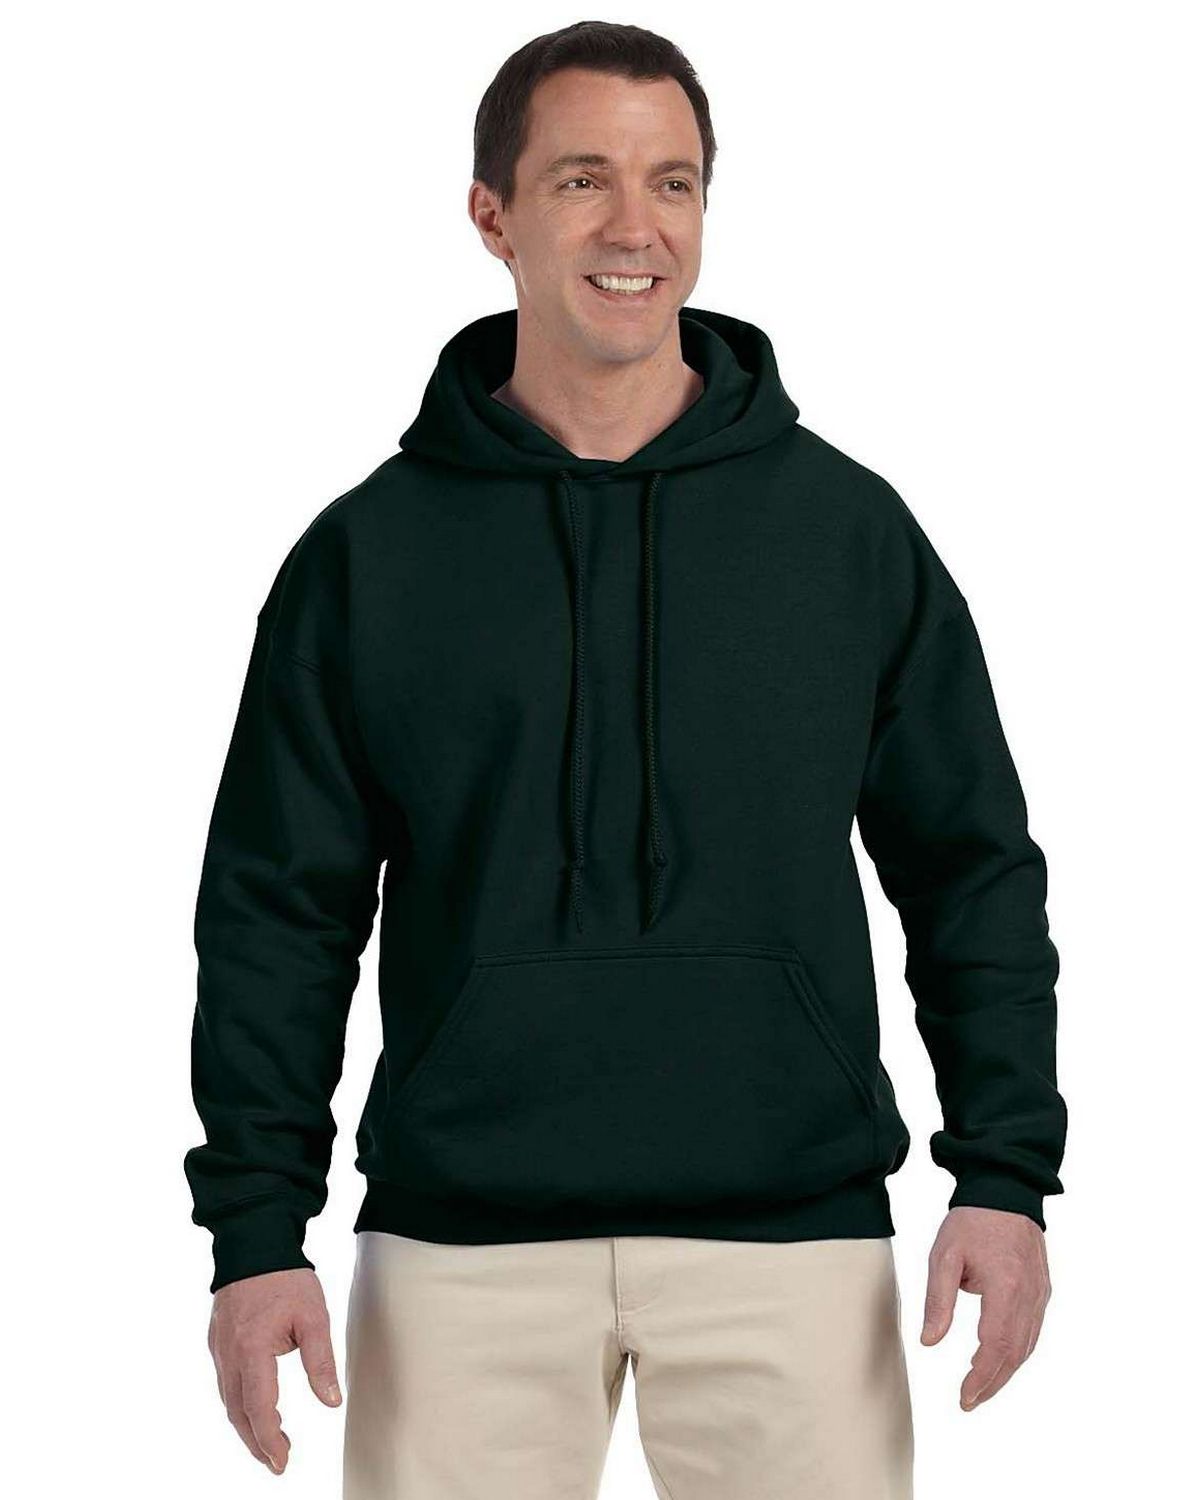 Gildan 12500 Hooded Sweatshirt - ApparelnBags.com